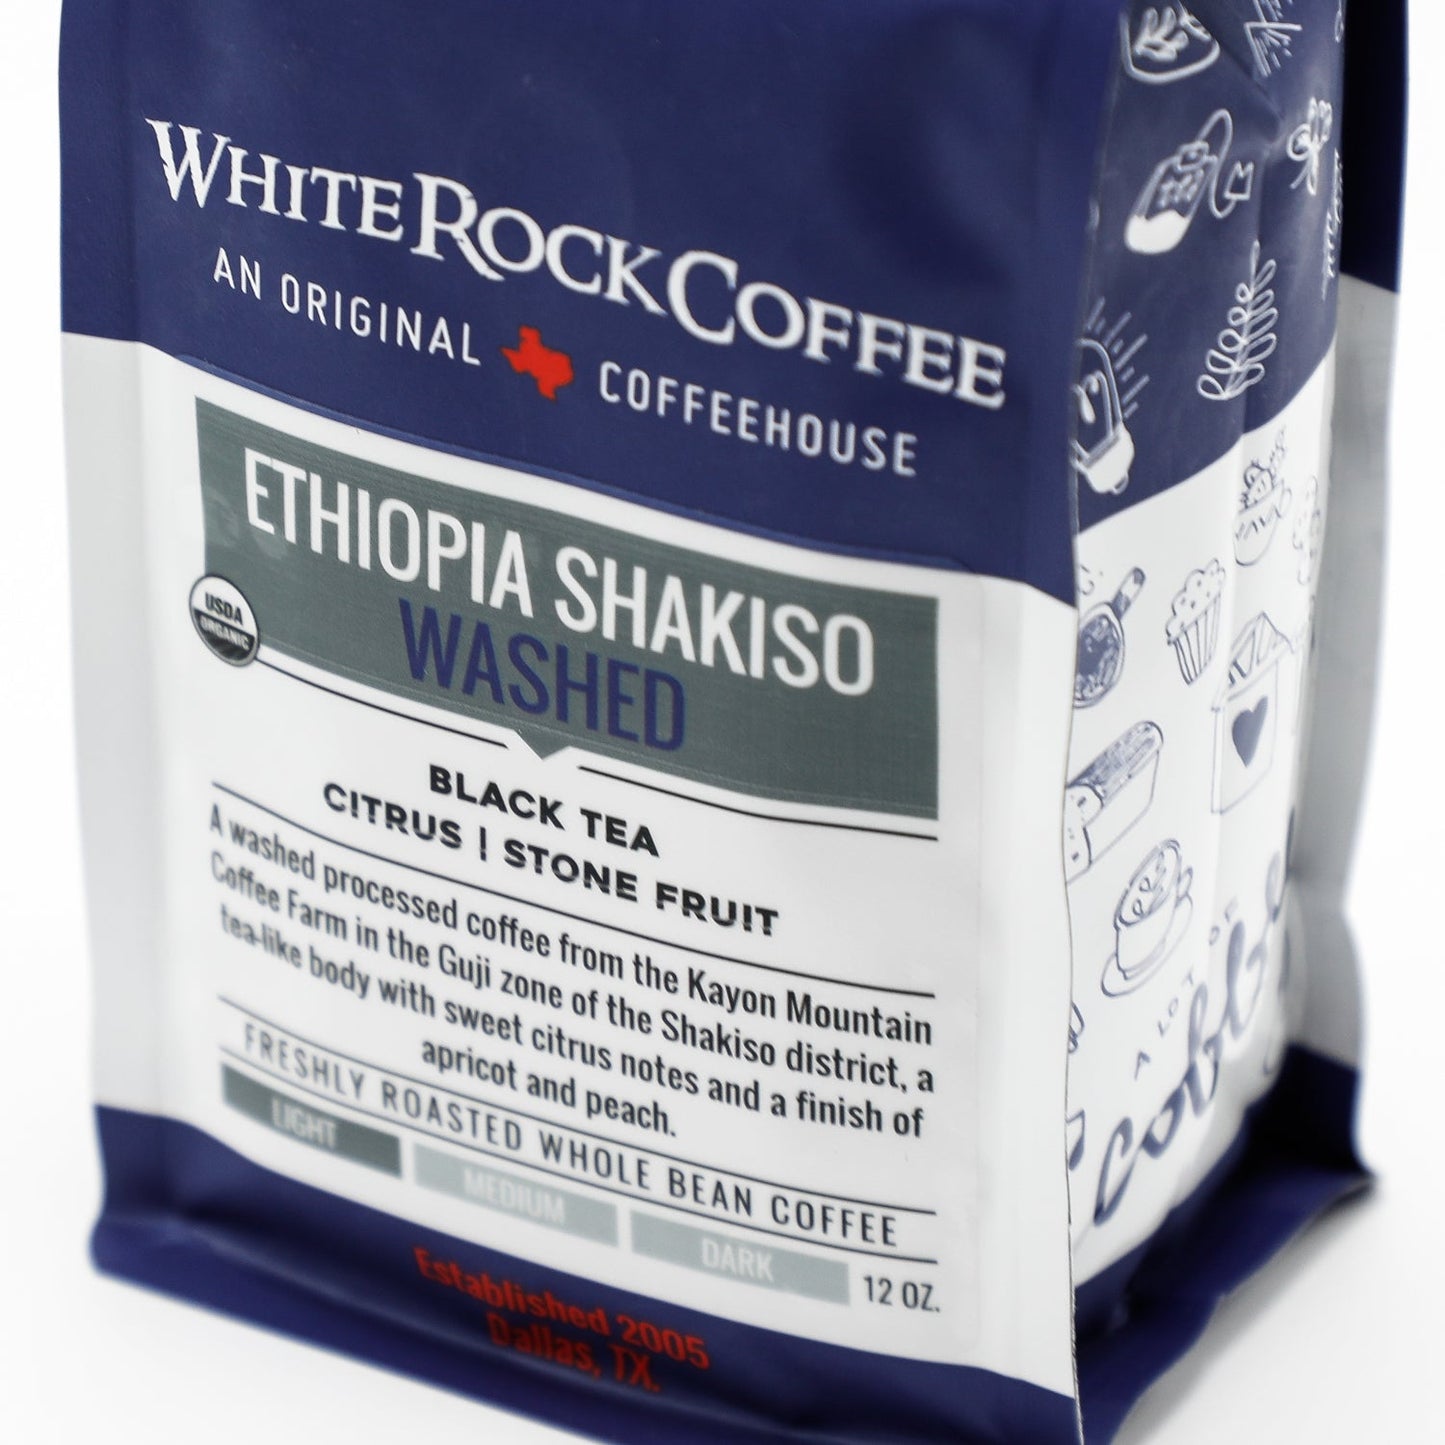 Ethiopia Shakiso Washed - White Rock Coffee